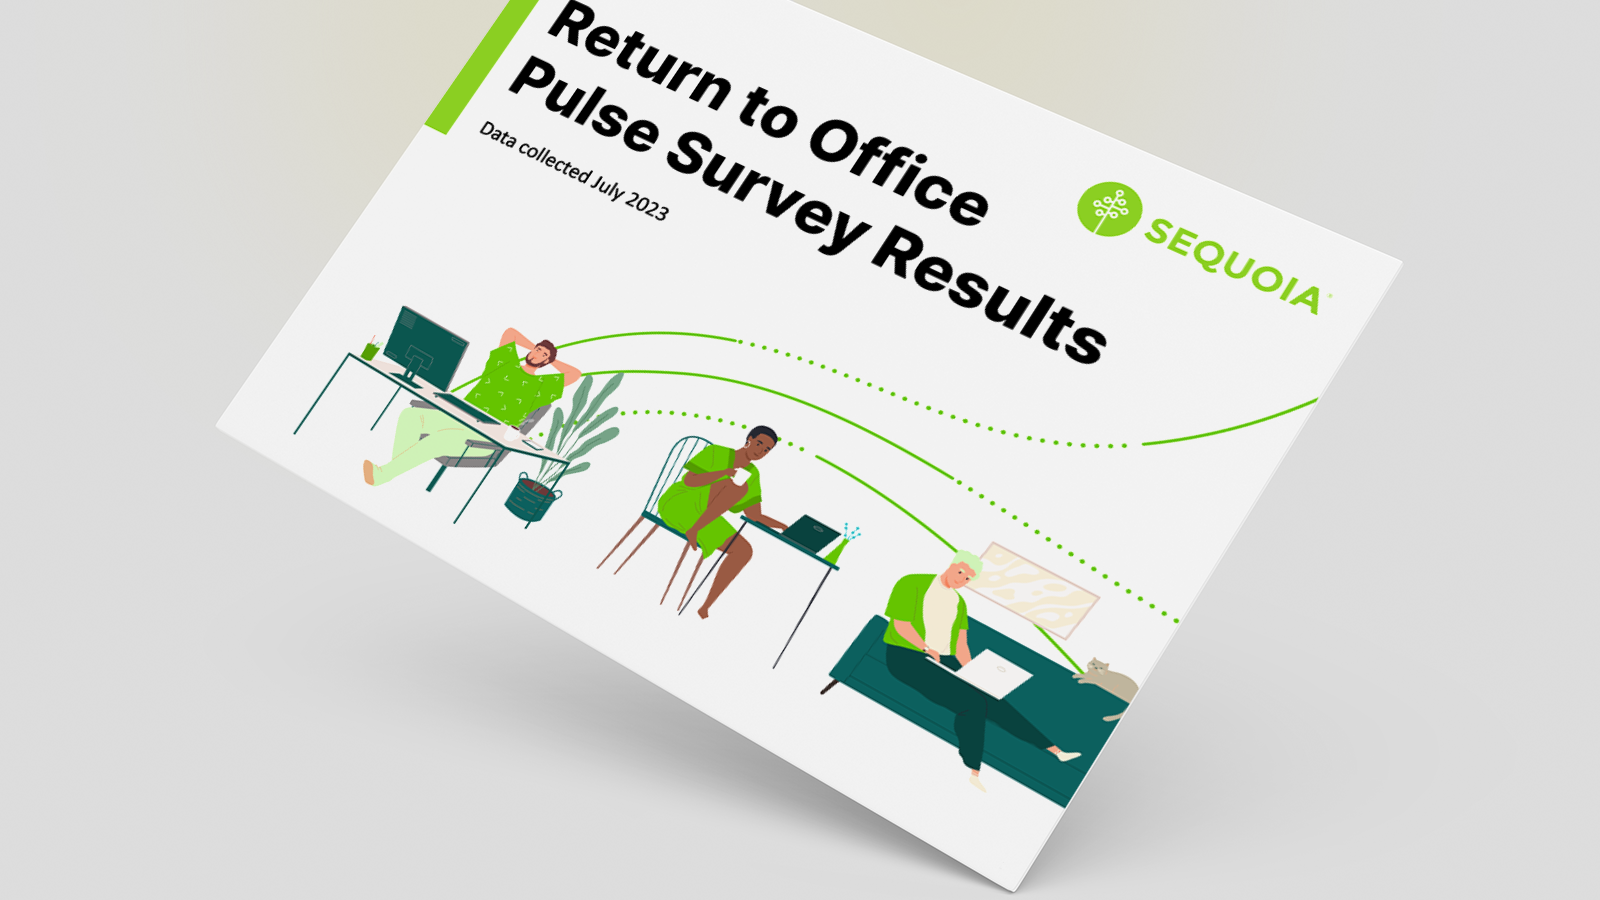 Return to Office Survey Thumbnail